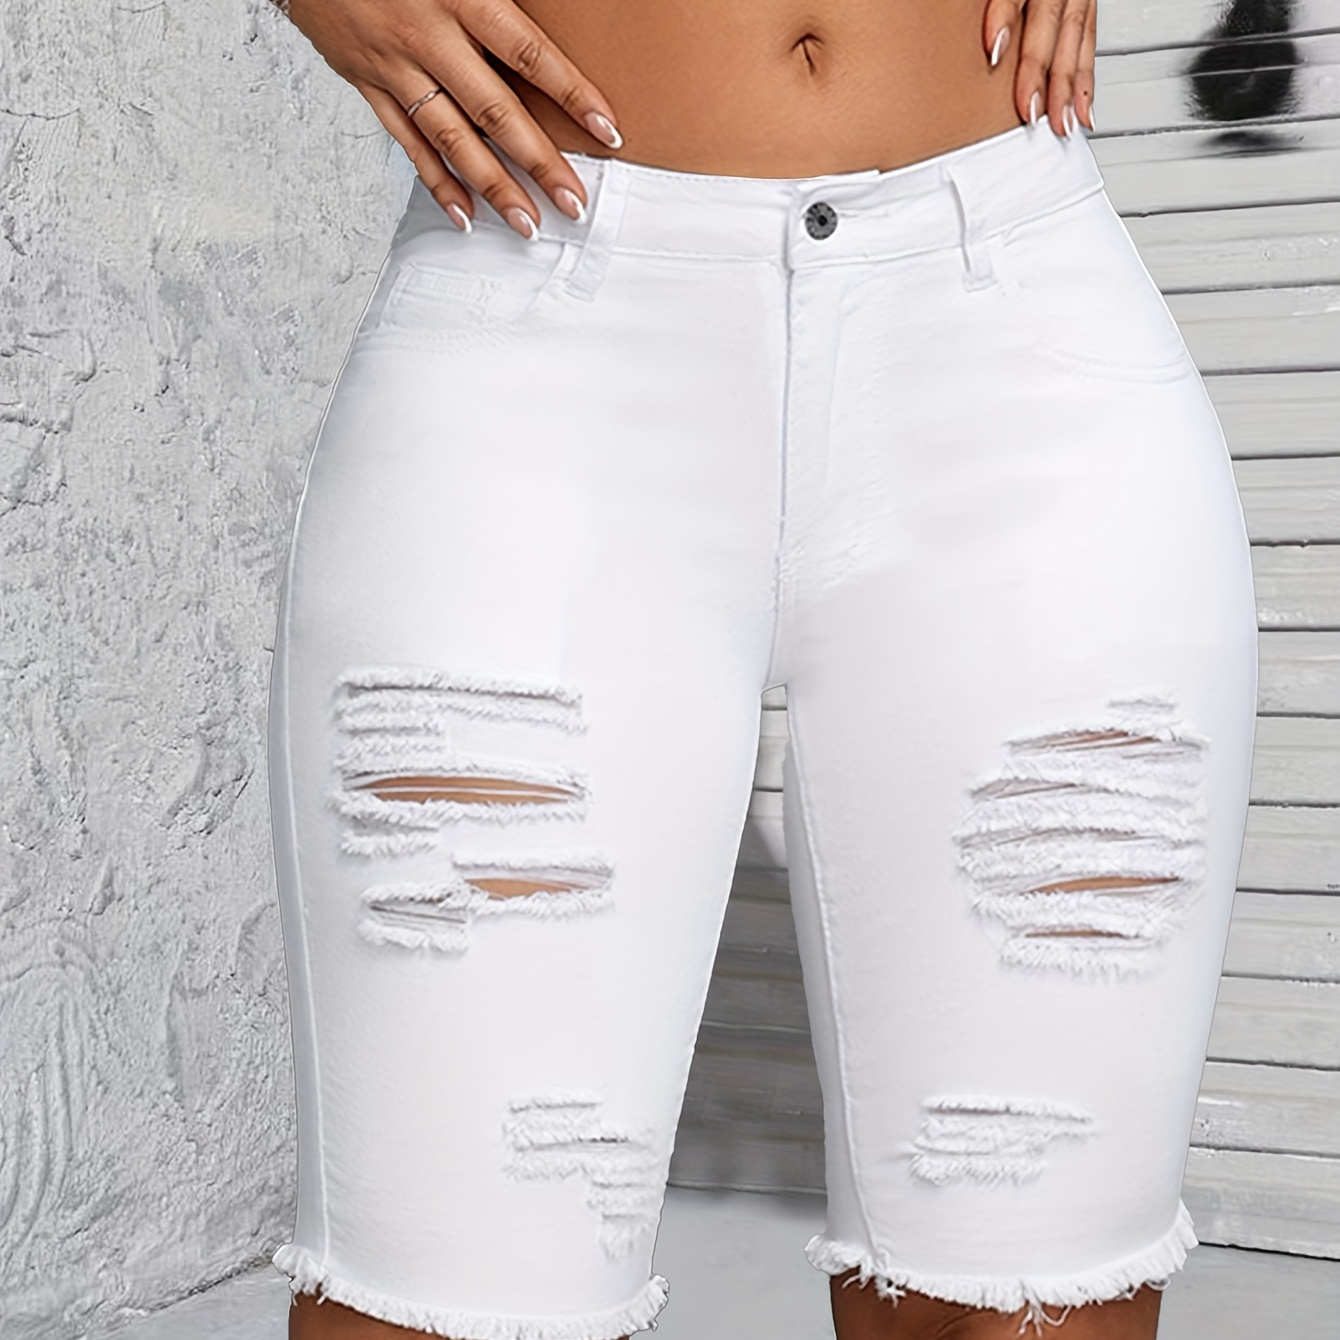 

Women's Stretchy Ripped Denim Bermuda Shorts, Casual Street Style, Plain White Frayed Hem, Distressed Jeans Jorts